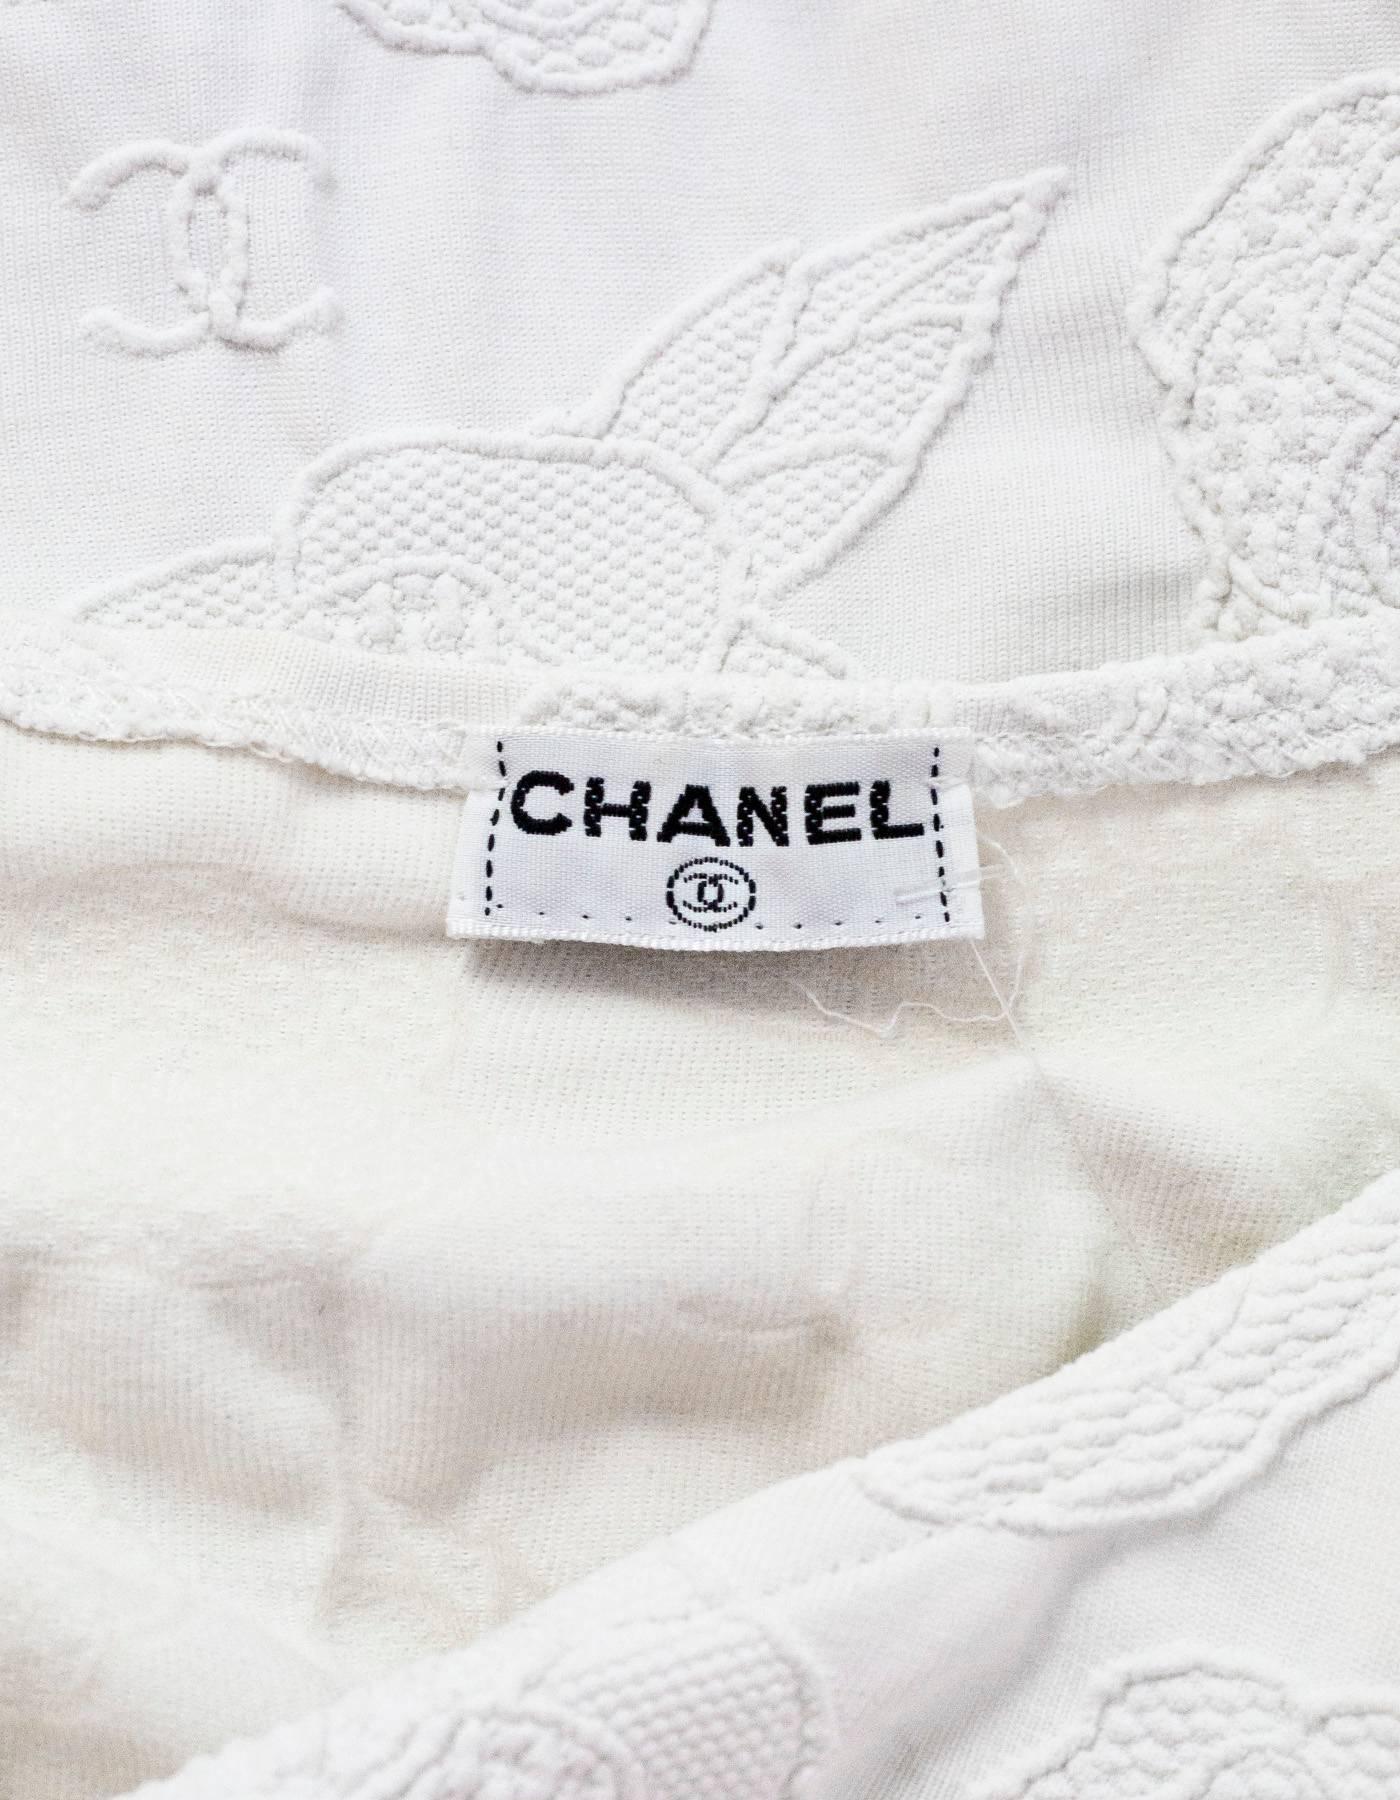 Chanel White Camelia CC Print Short Sleeve Top sz S 1